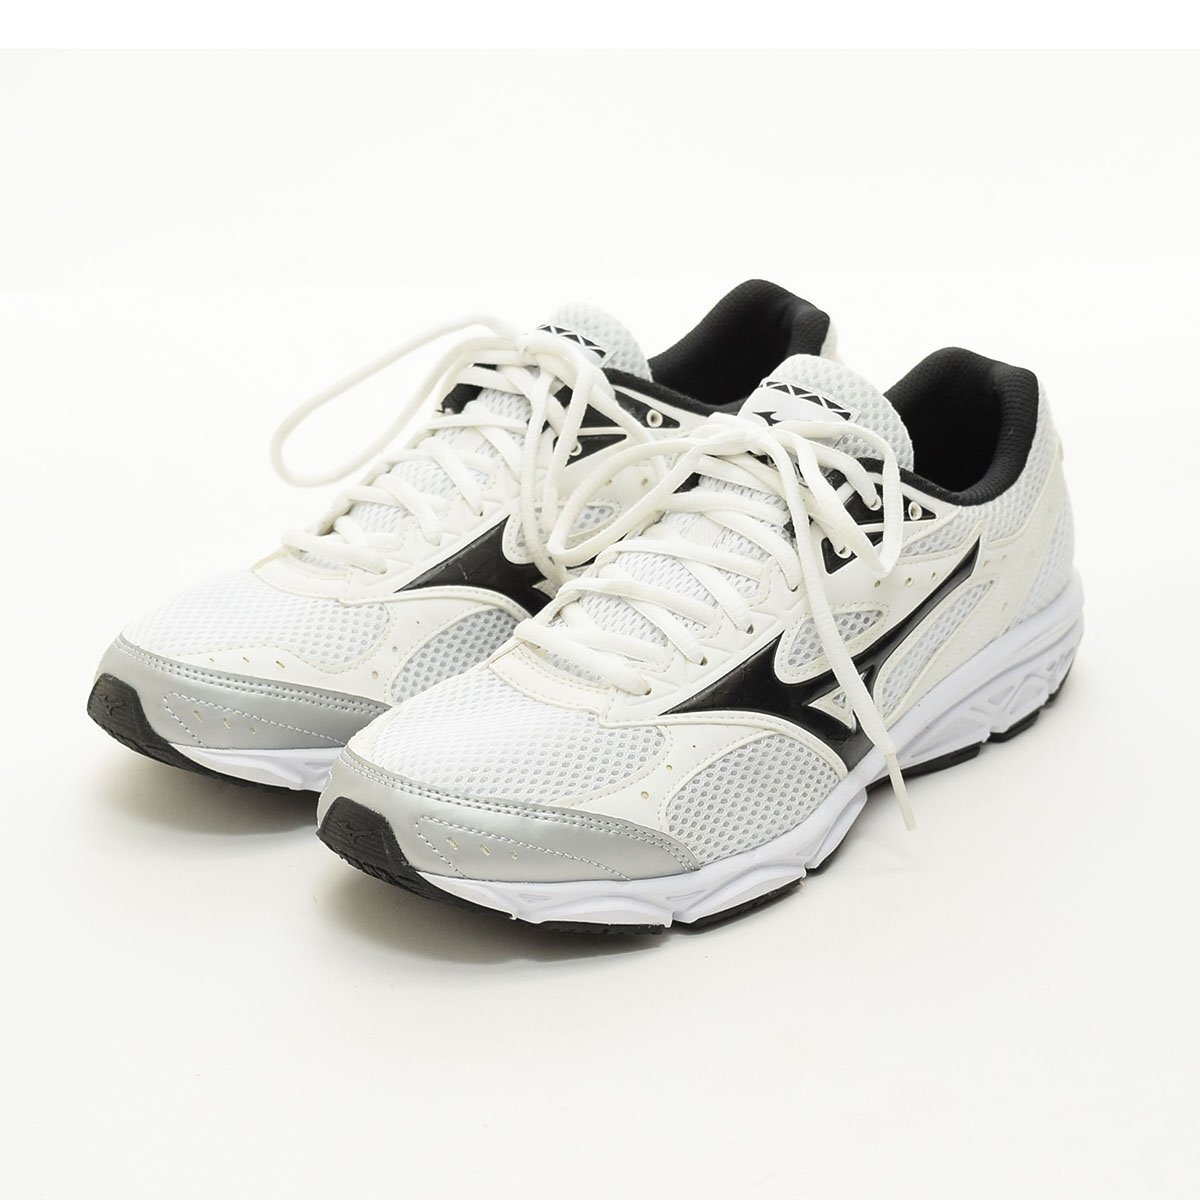 *507573 Mizuno Mizuno * running shoes Maxima i The -20jo silver g sport shoes sneakers size 27.0cm men's white black 